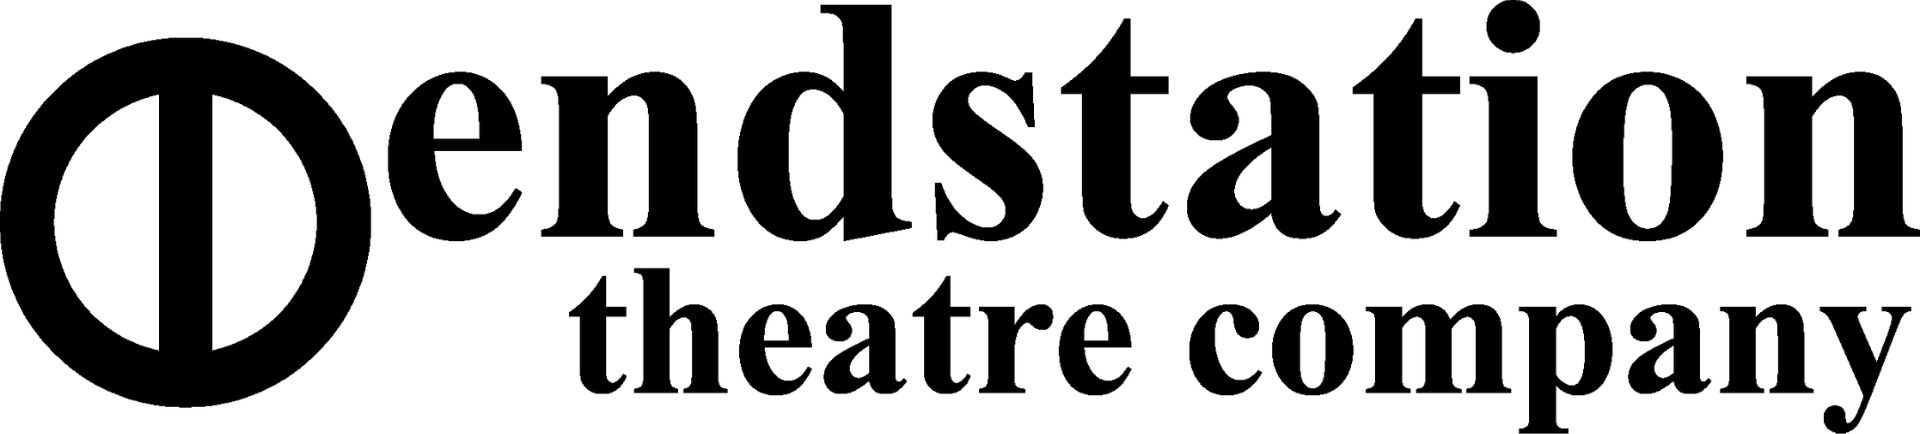 Endstation Theatre Company